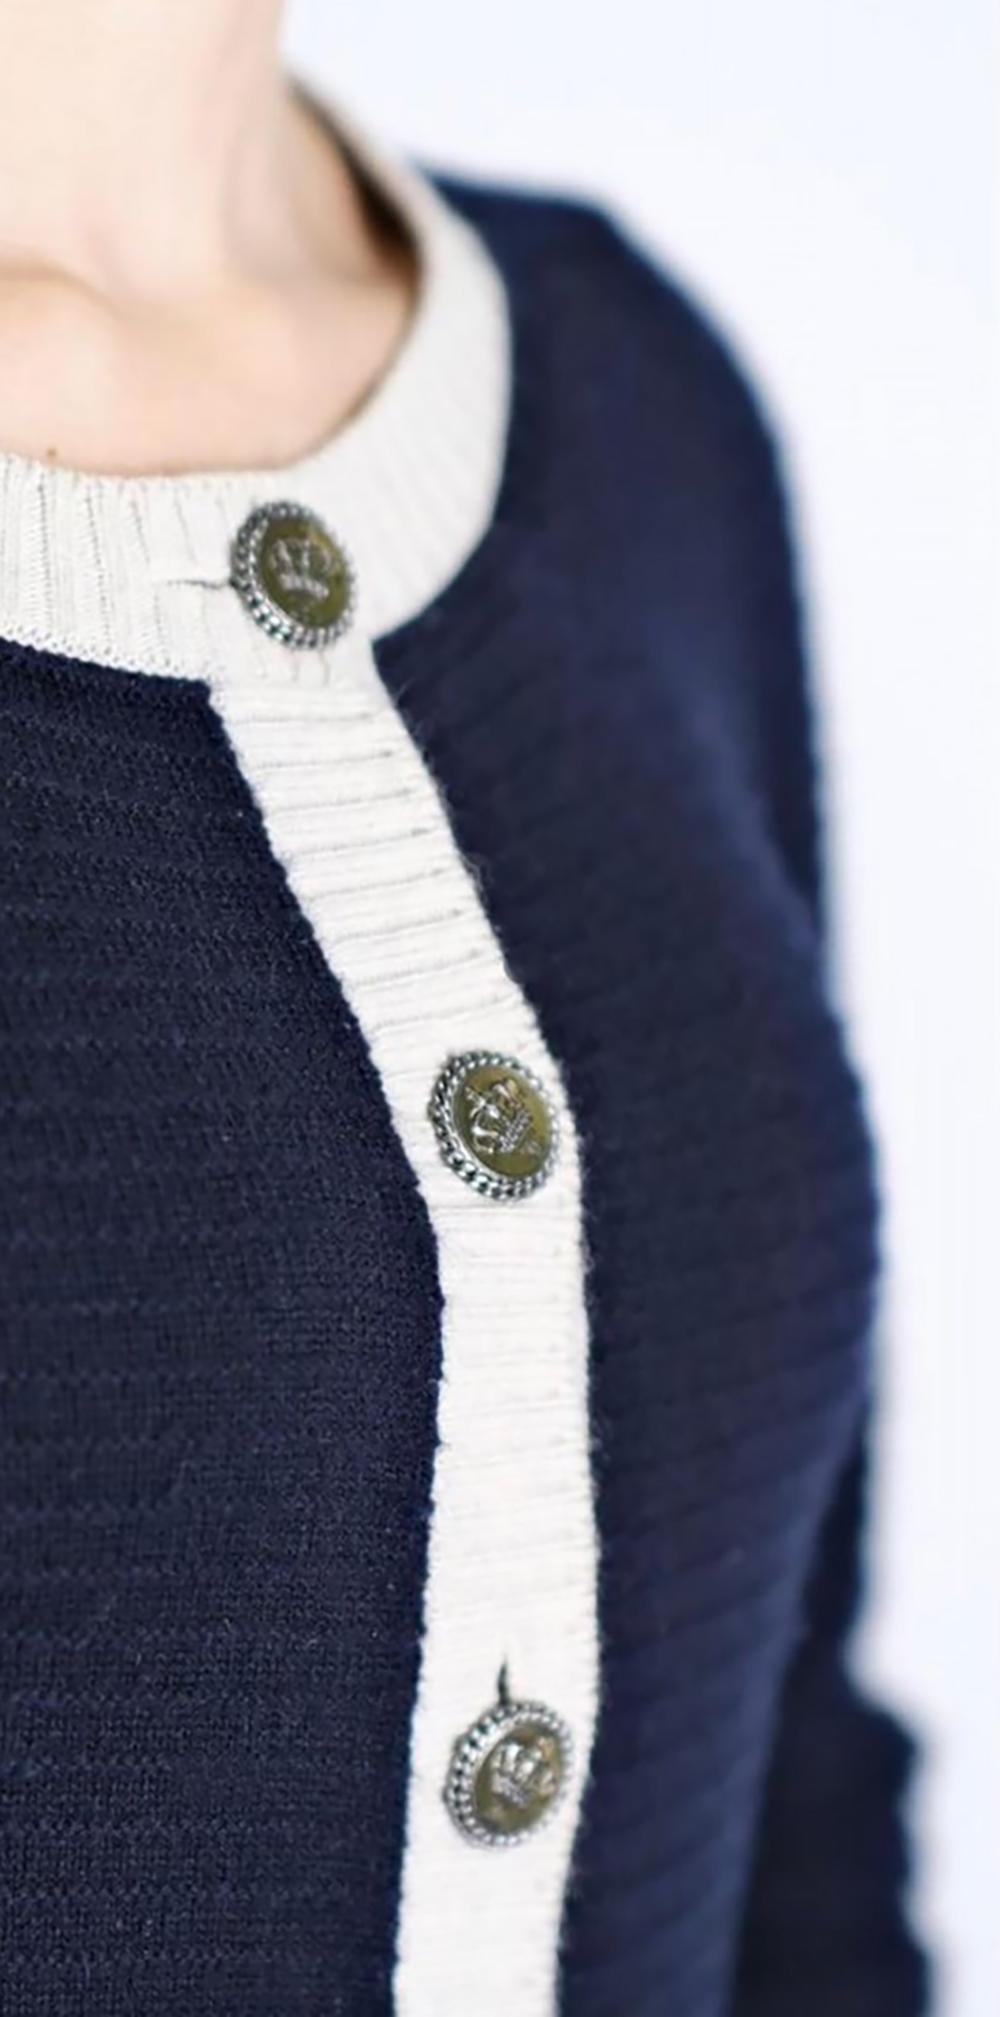 Chanel Paris / London CC Regal Buttons Cardigan In Excellent Condition For Sale In Dubai, AE